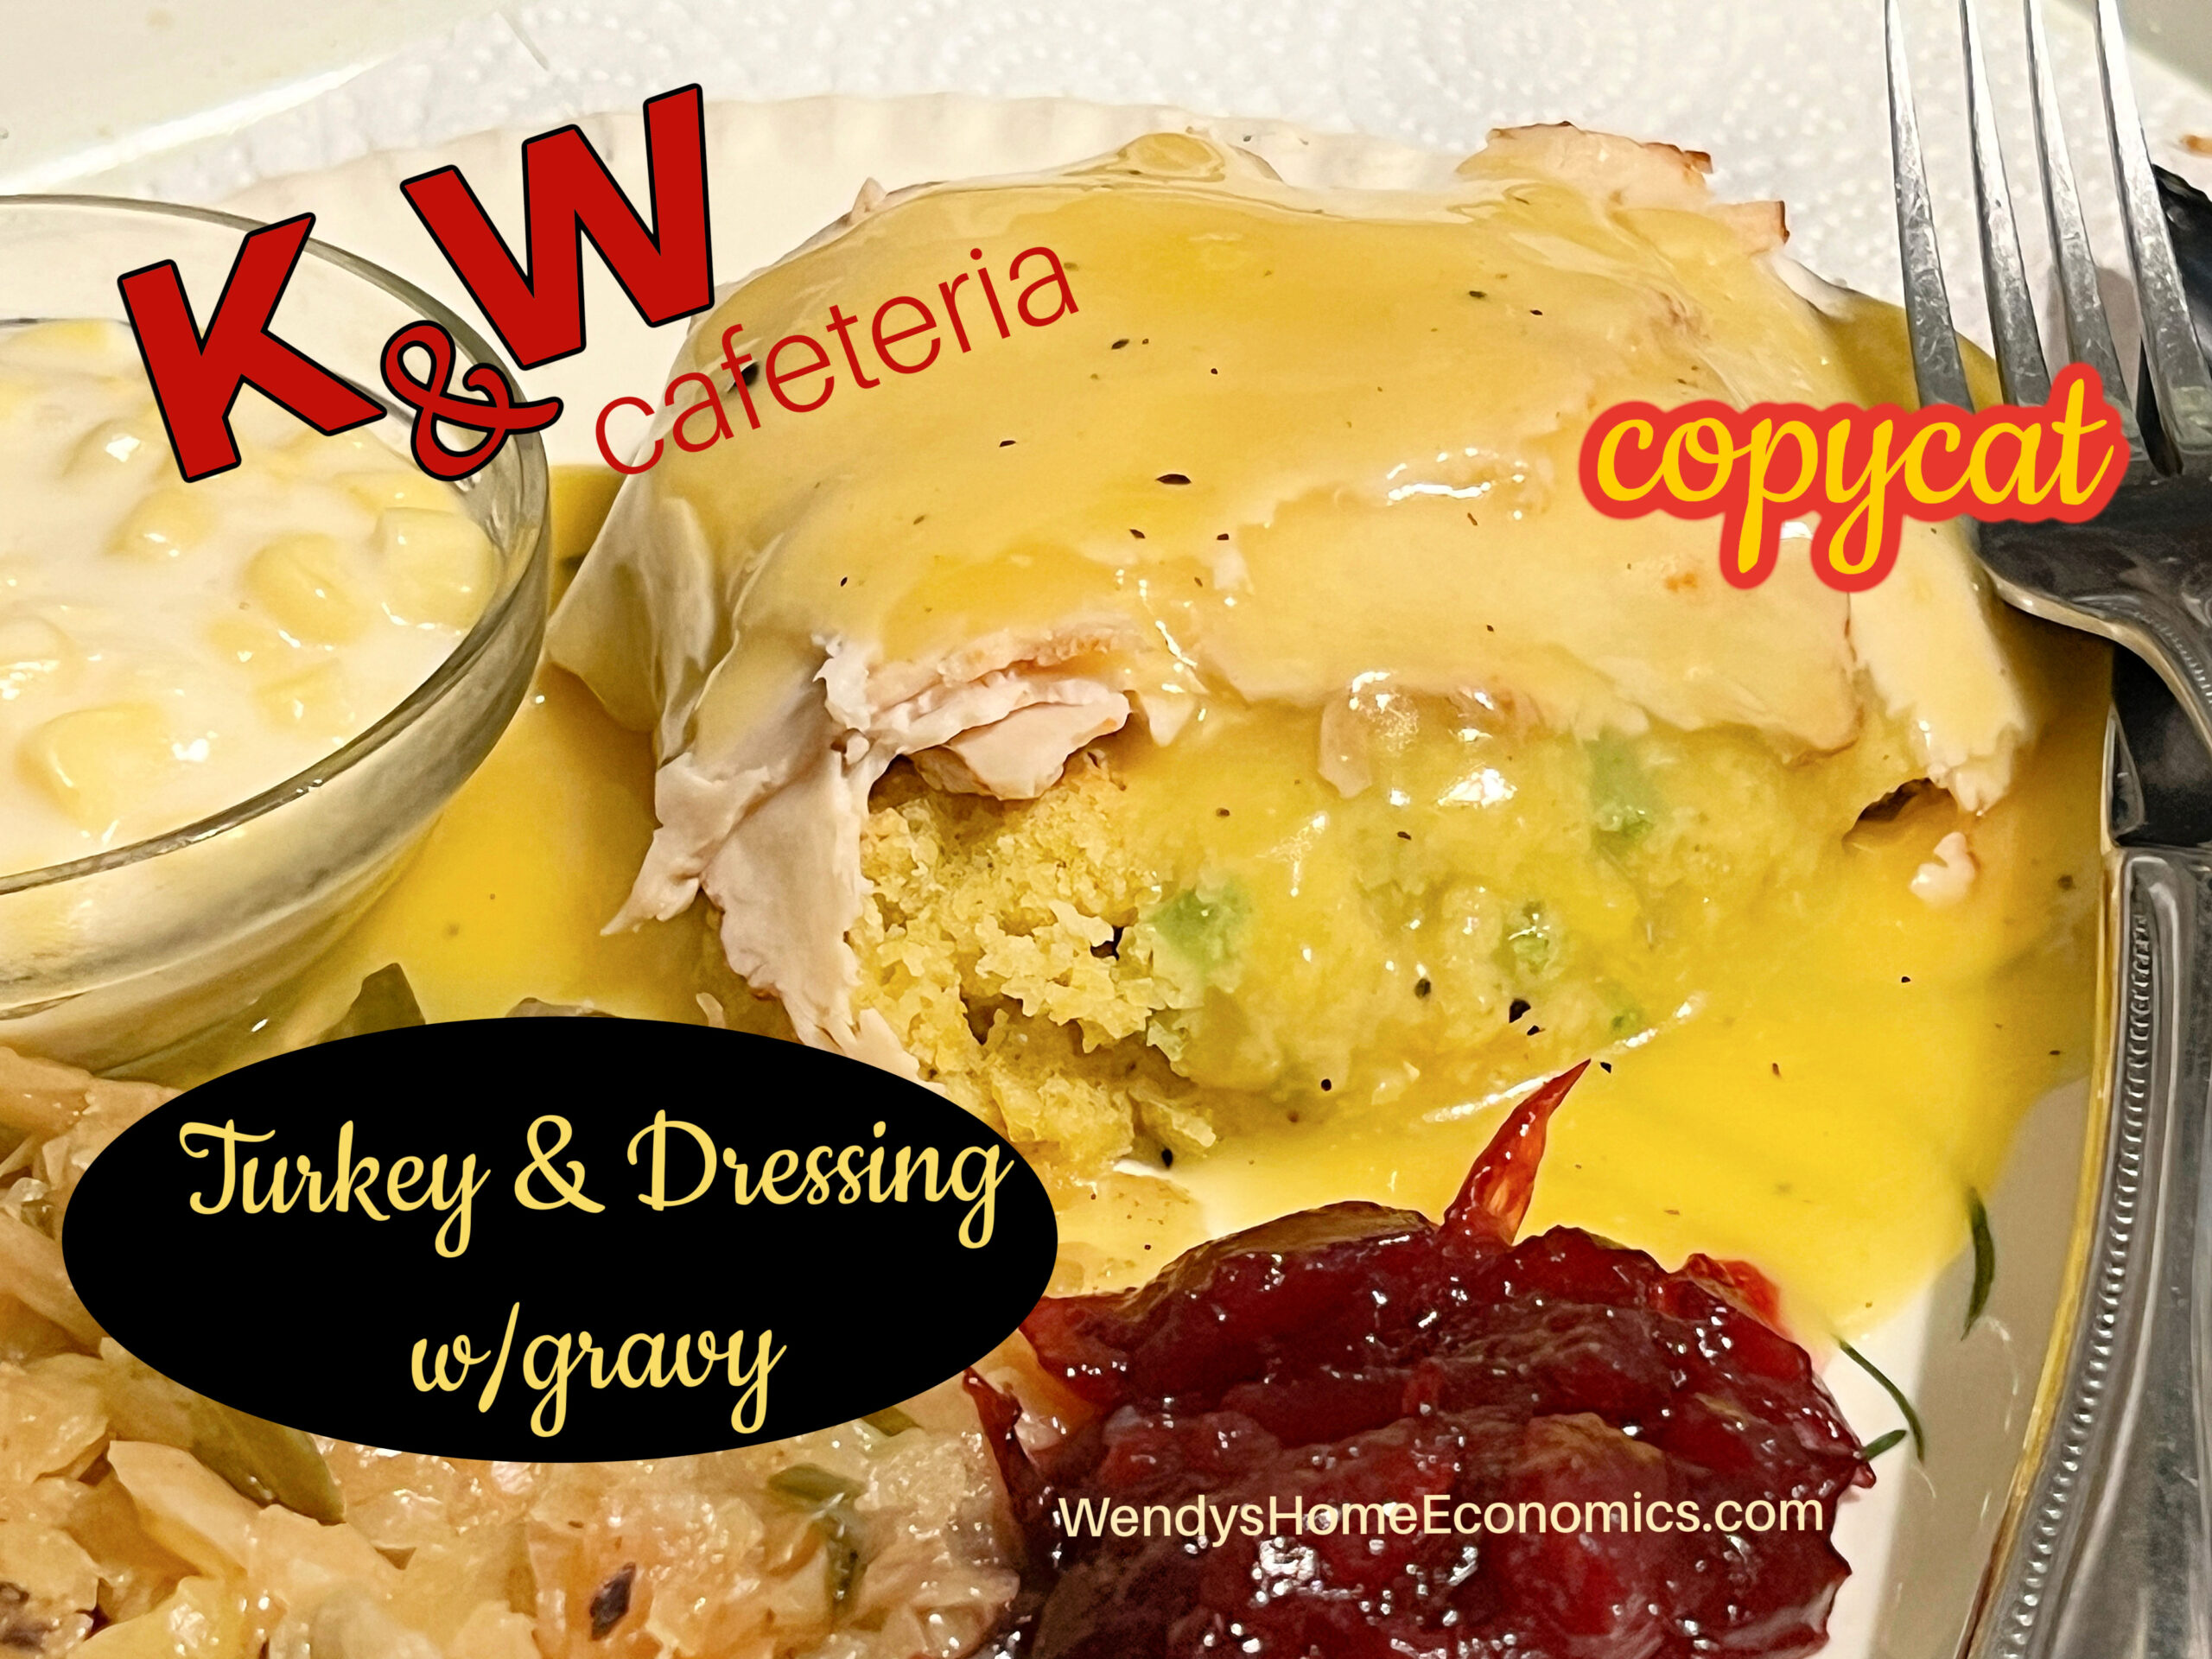 image of K&W turkey and dressing copycat recipe